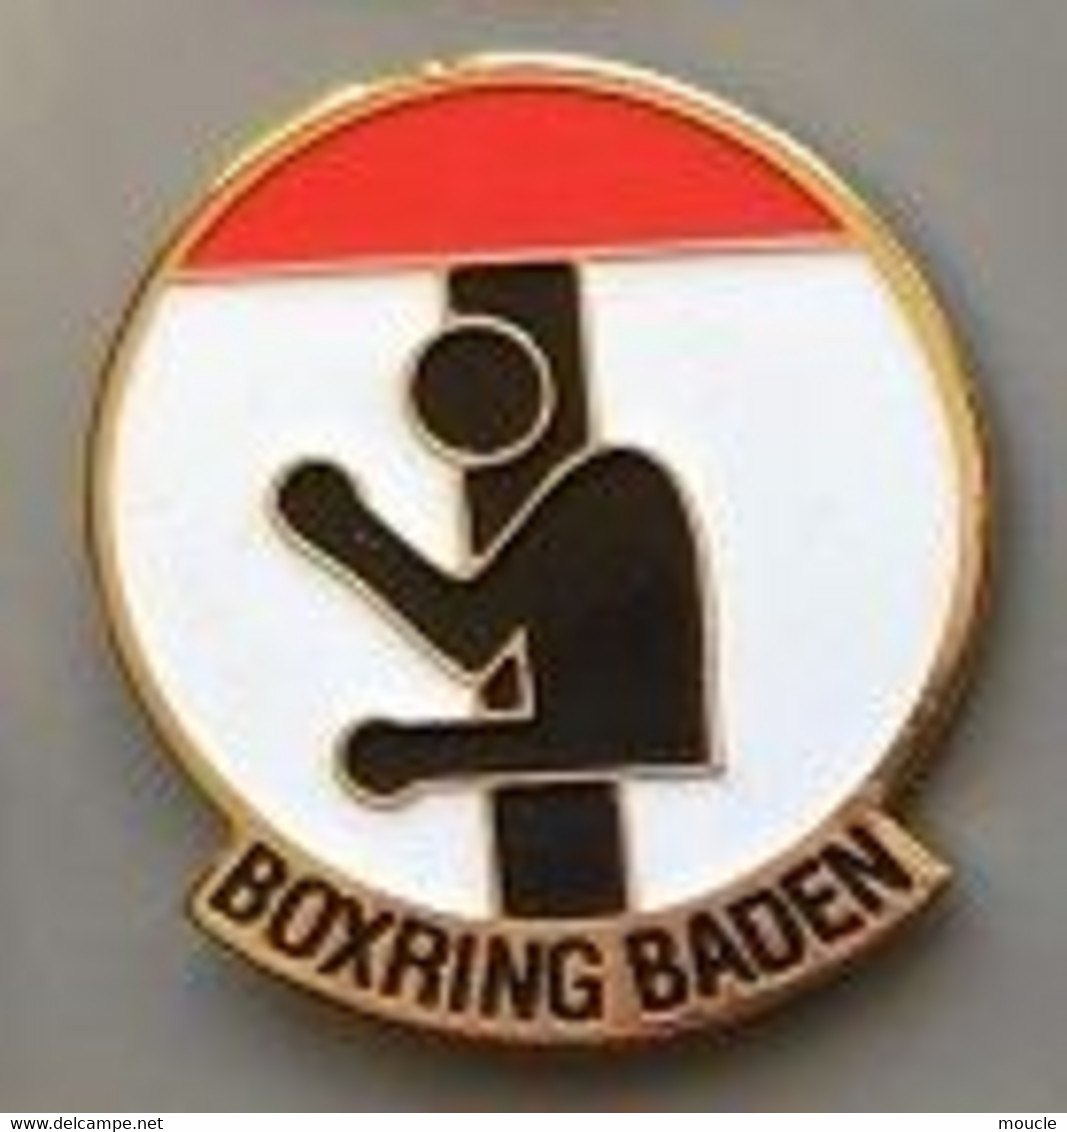 BOXRING BADEN - SCHWEIZ - BOXING CLUB - SUISSE - BOXEUR - GANTS - RING - SWITZERLAND - SVIZZERA - BOXING - BOXEN - (30) - Boxeo